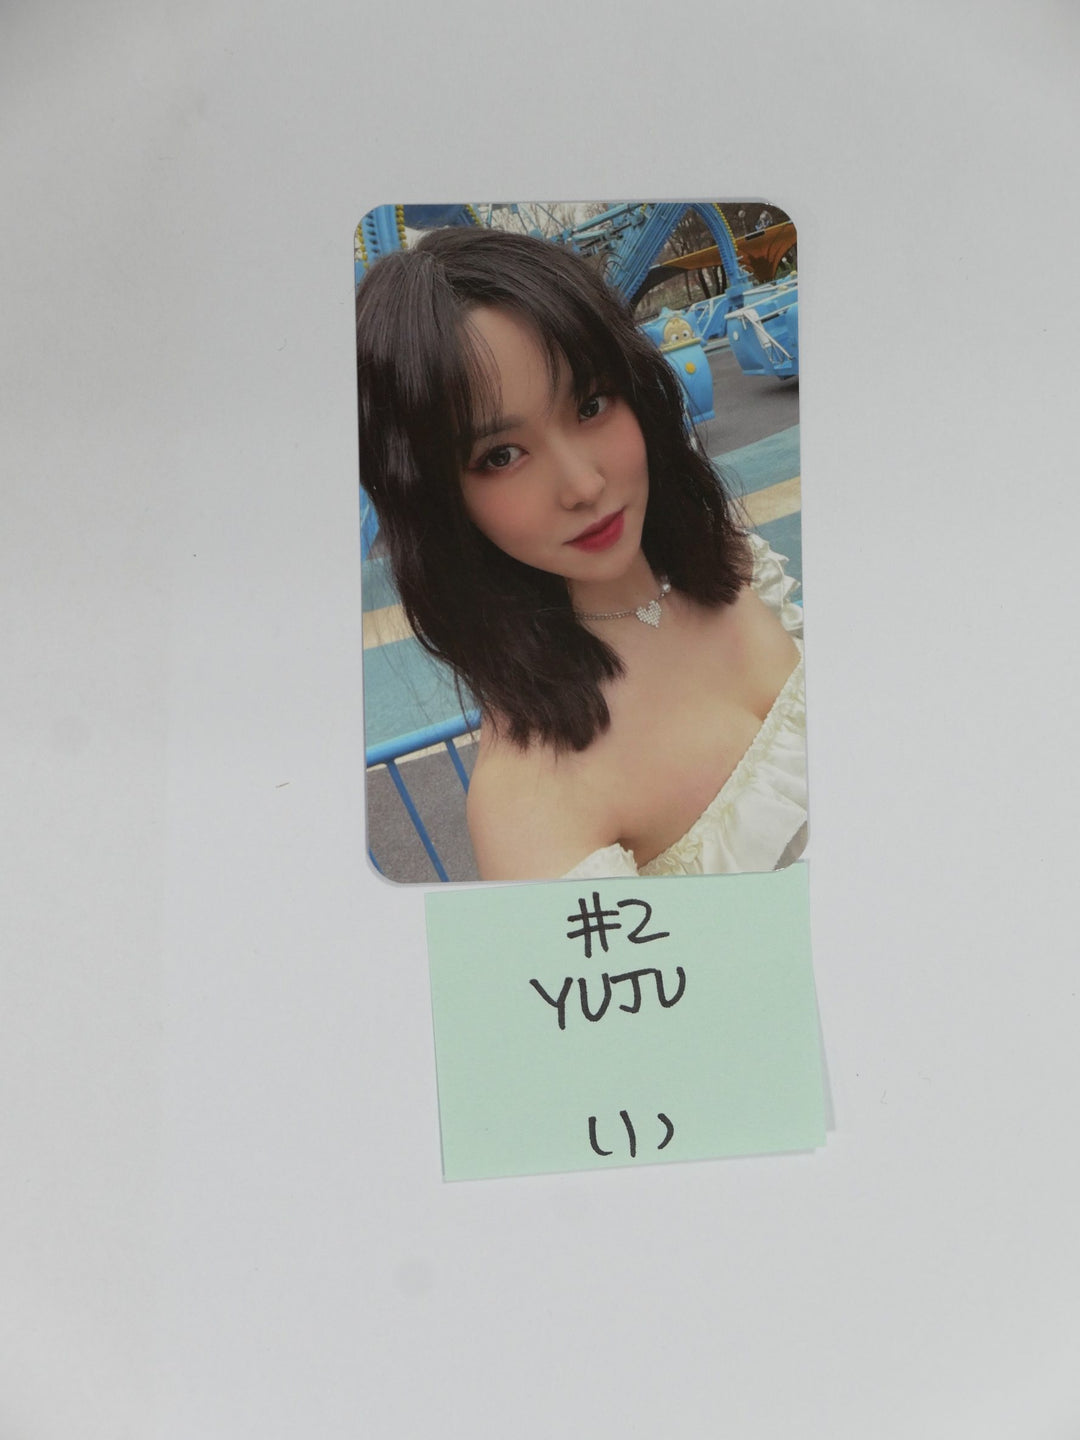 YUJU (Of GFRIEND) "[REC.]" - Official Photocard